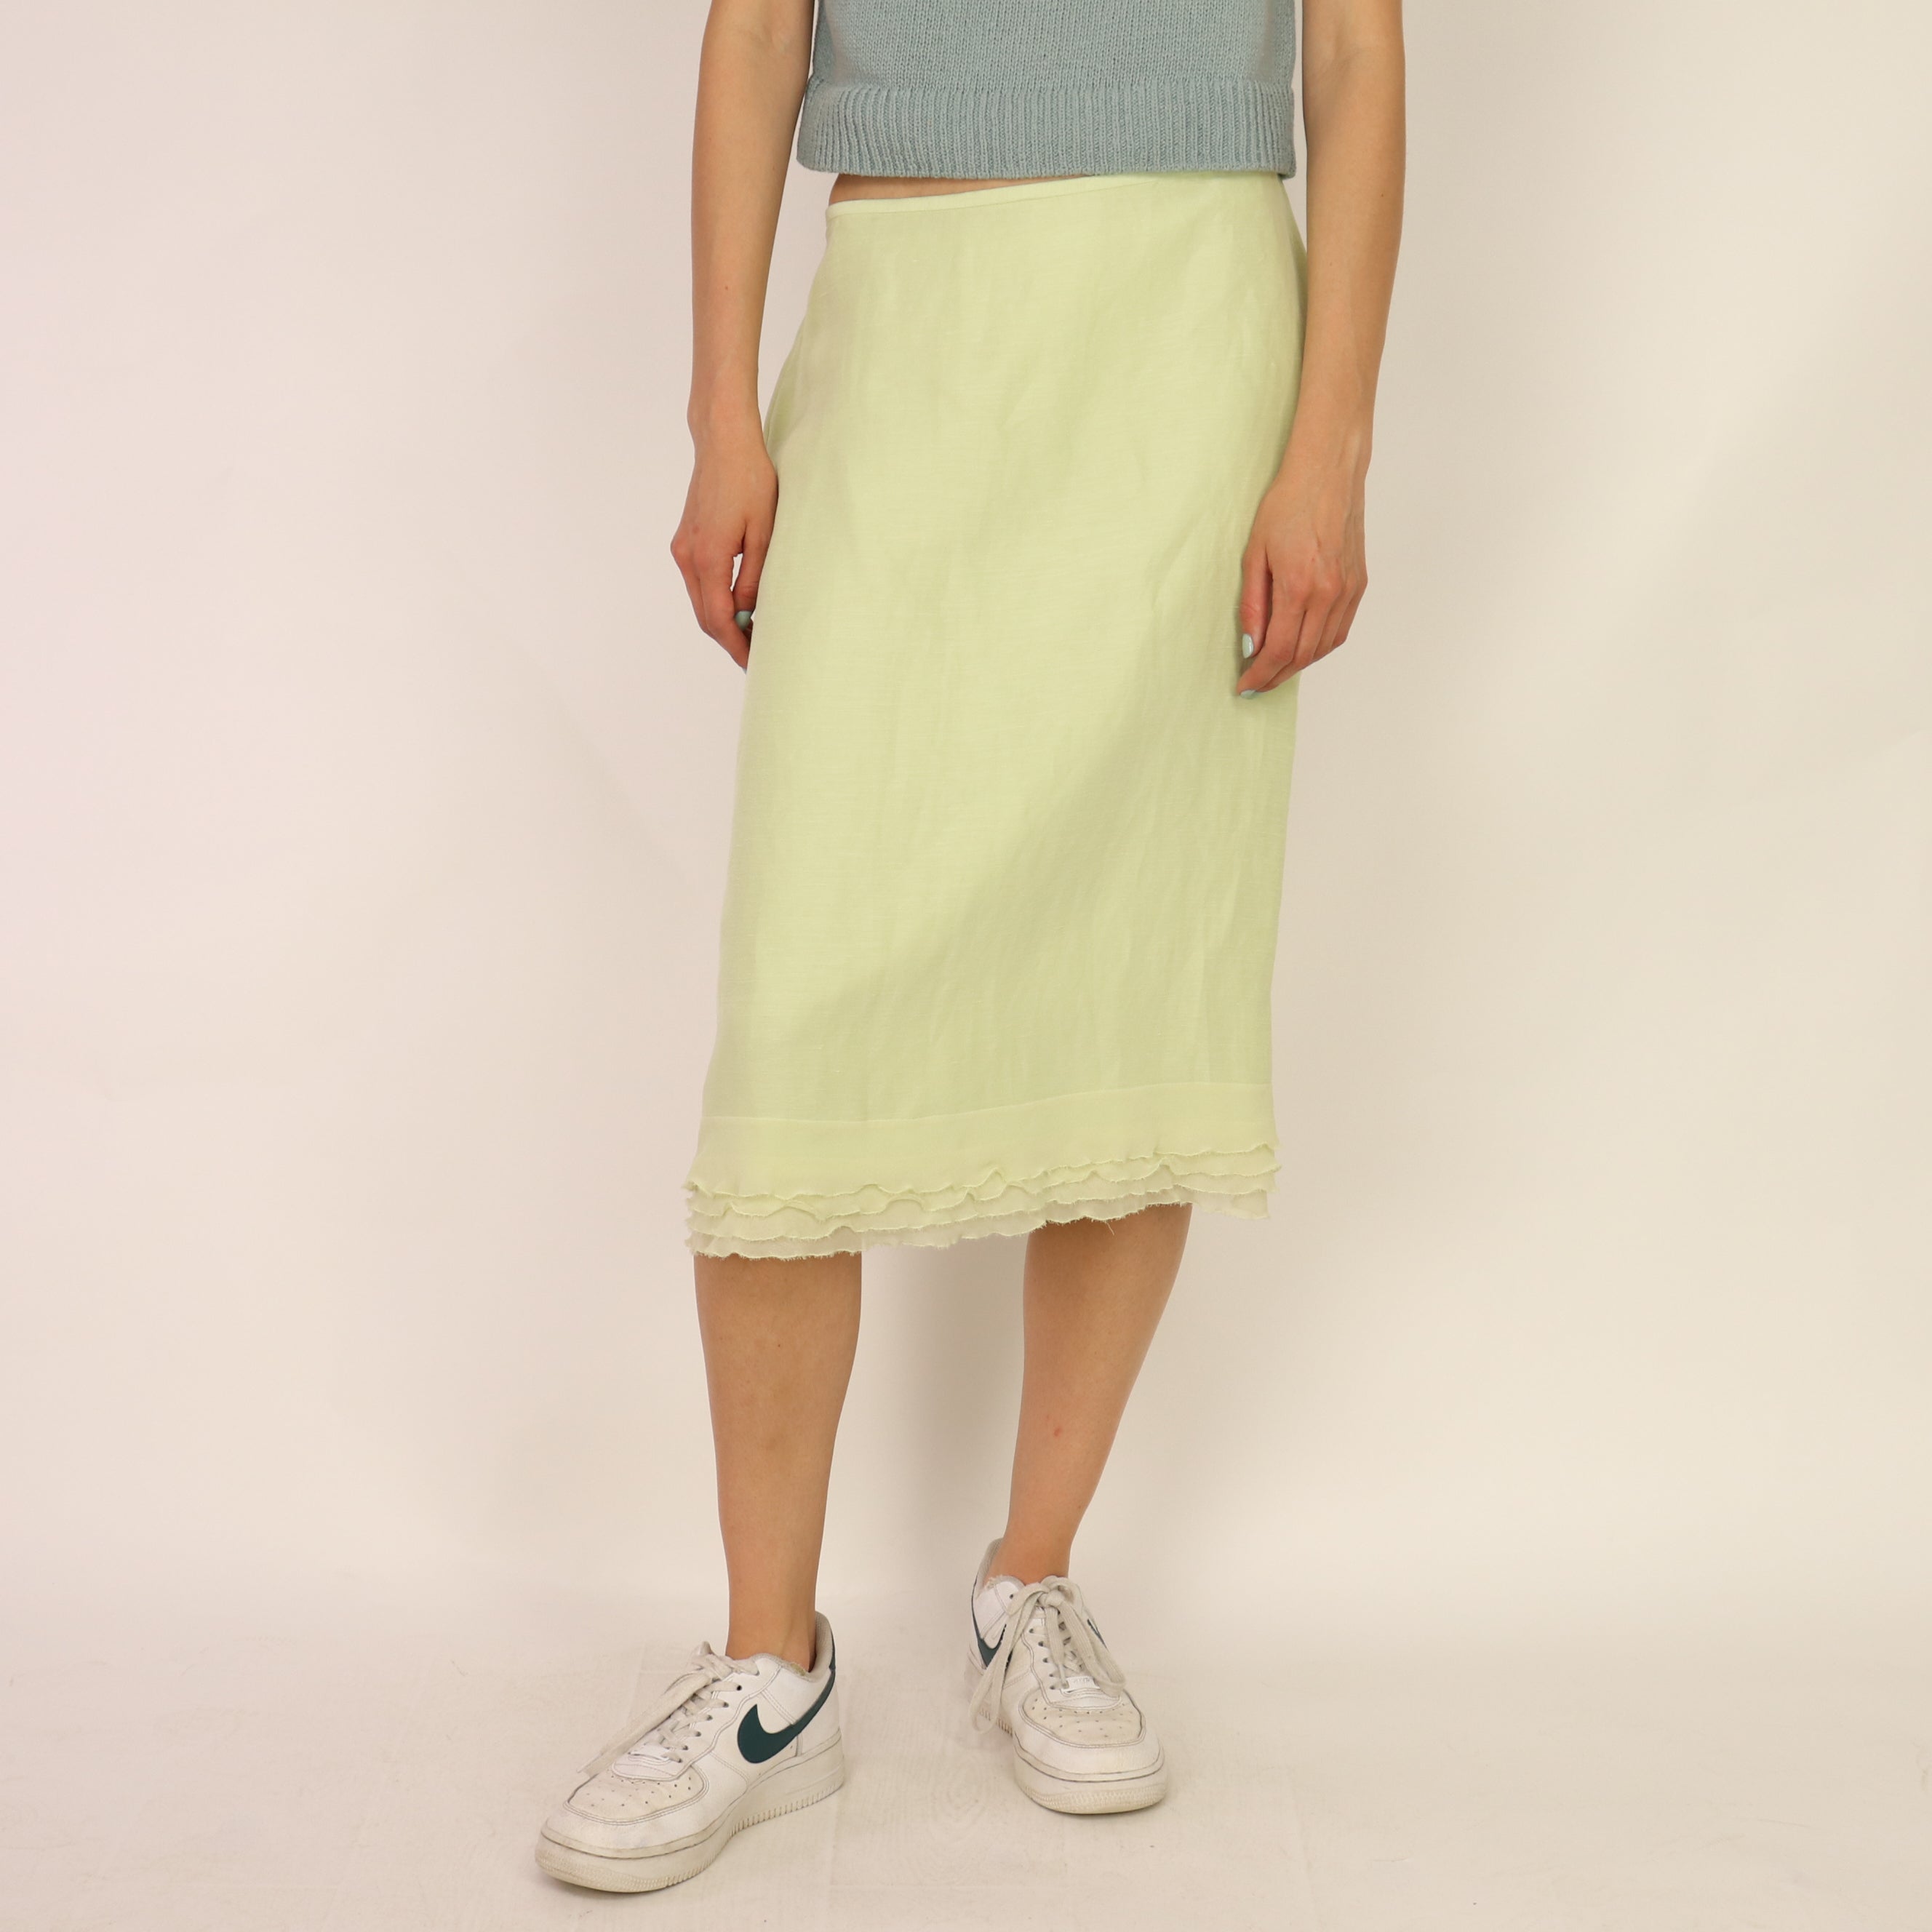 Skirt, Size 12